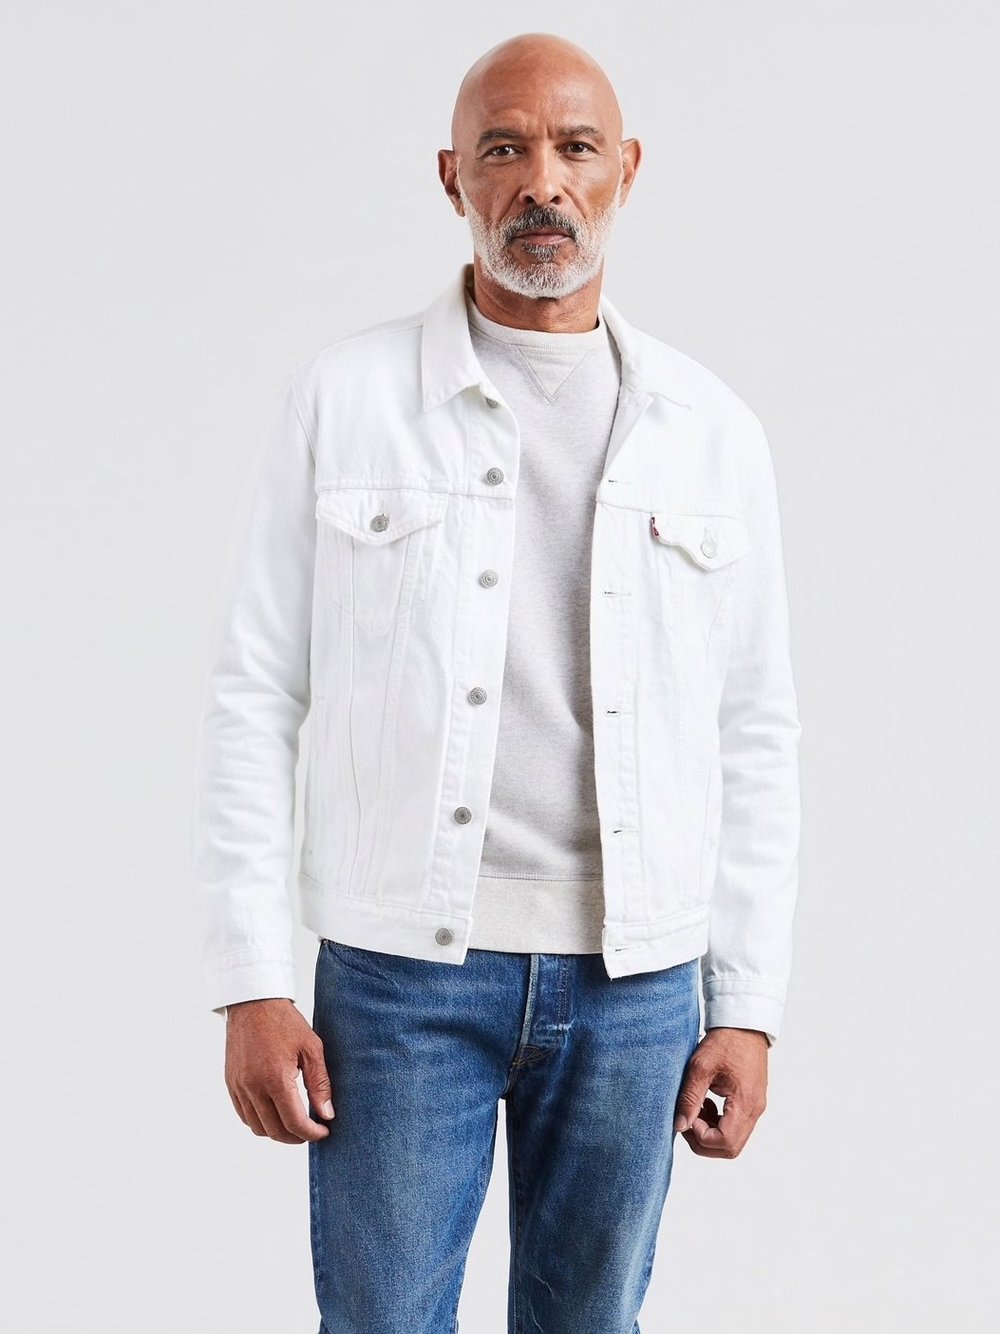 levis white trucker jacket.jpg